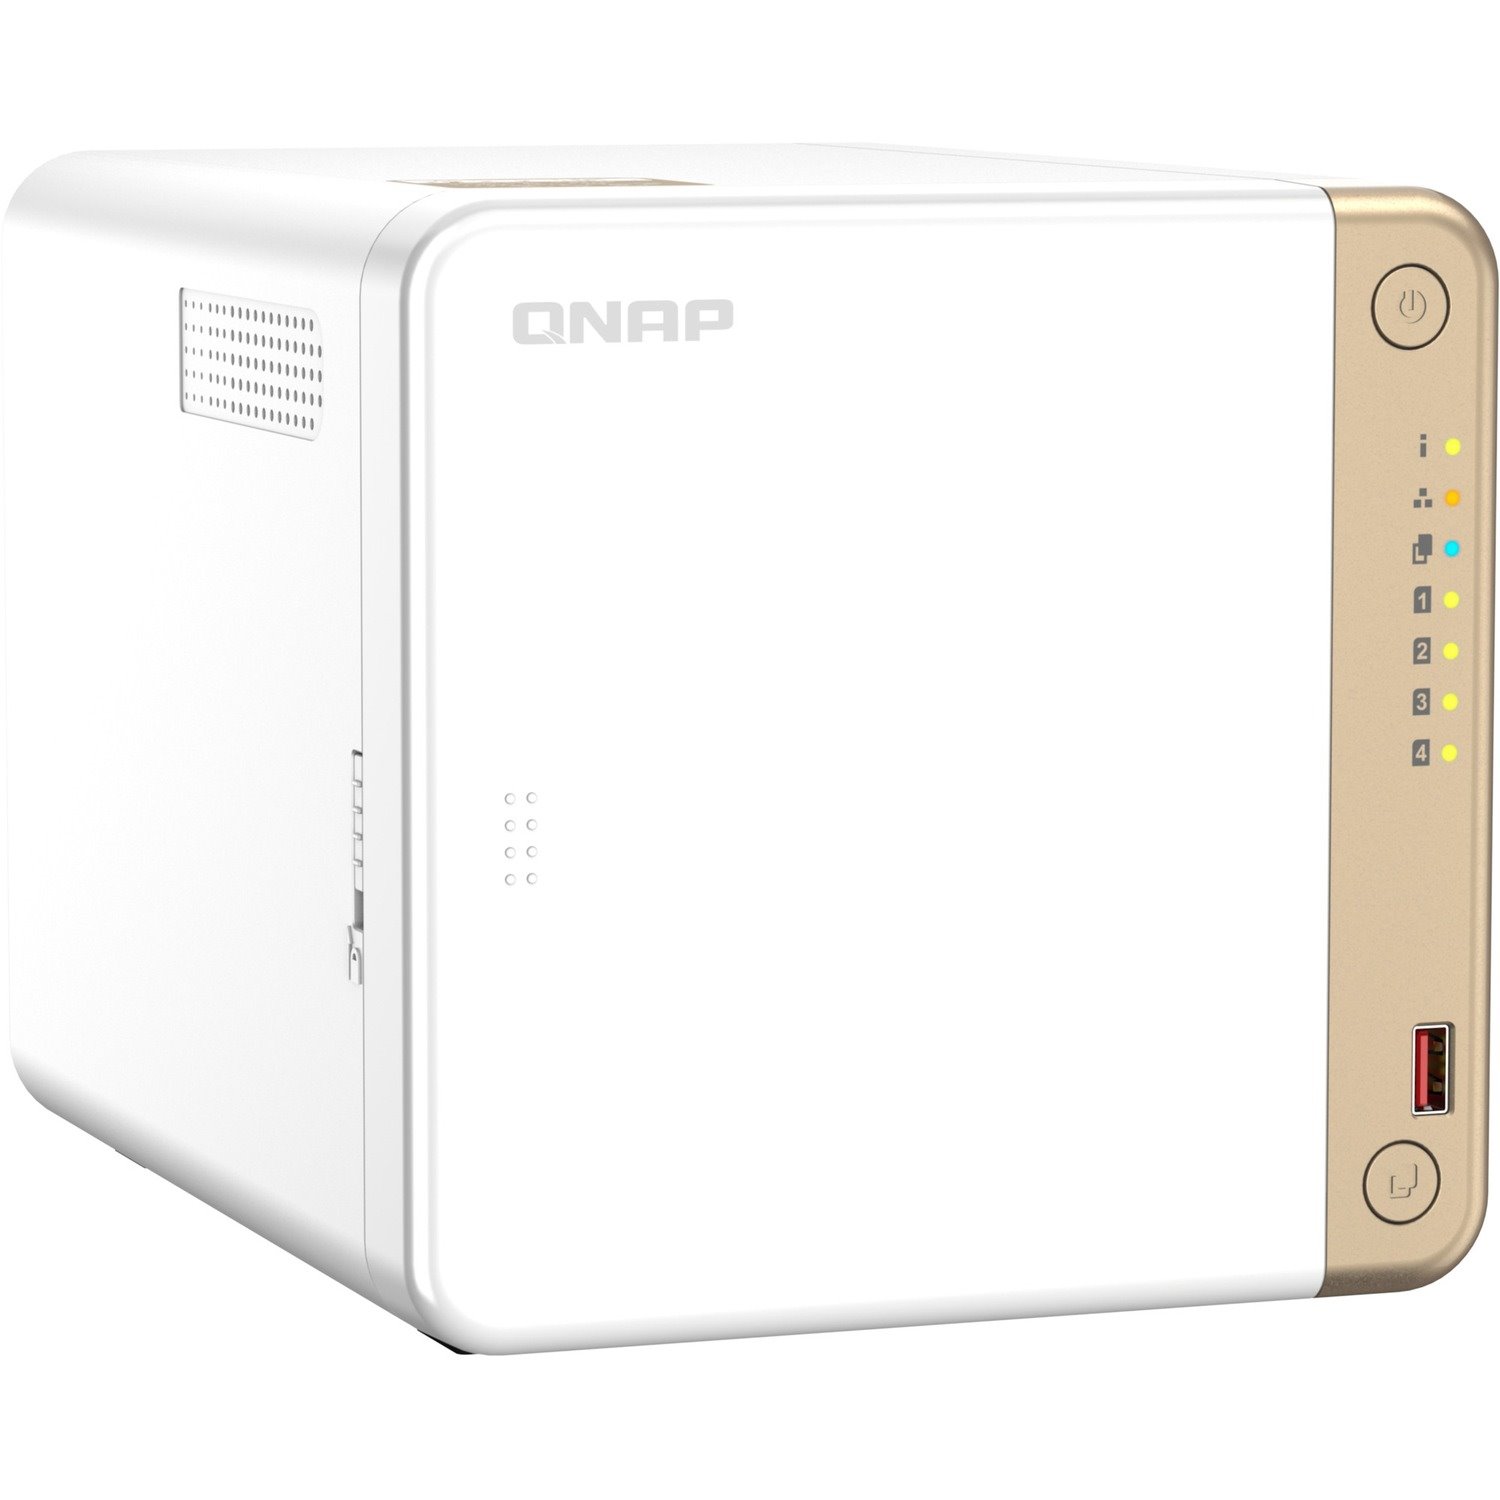 QNAP Turbo NAS TS-462-2G SAN/NAS Storage System